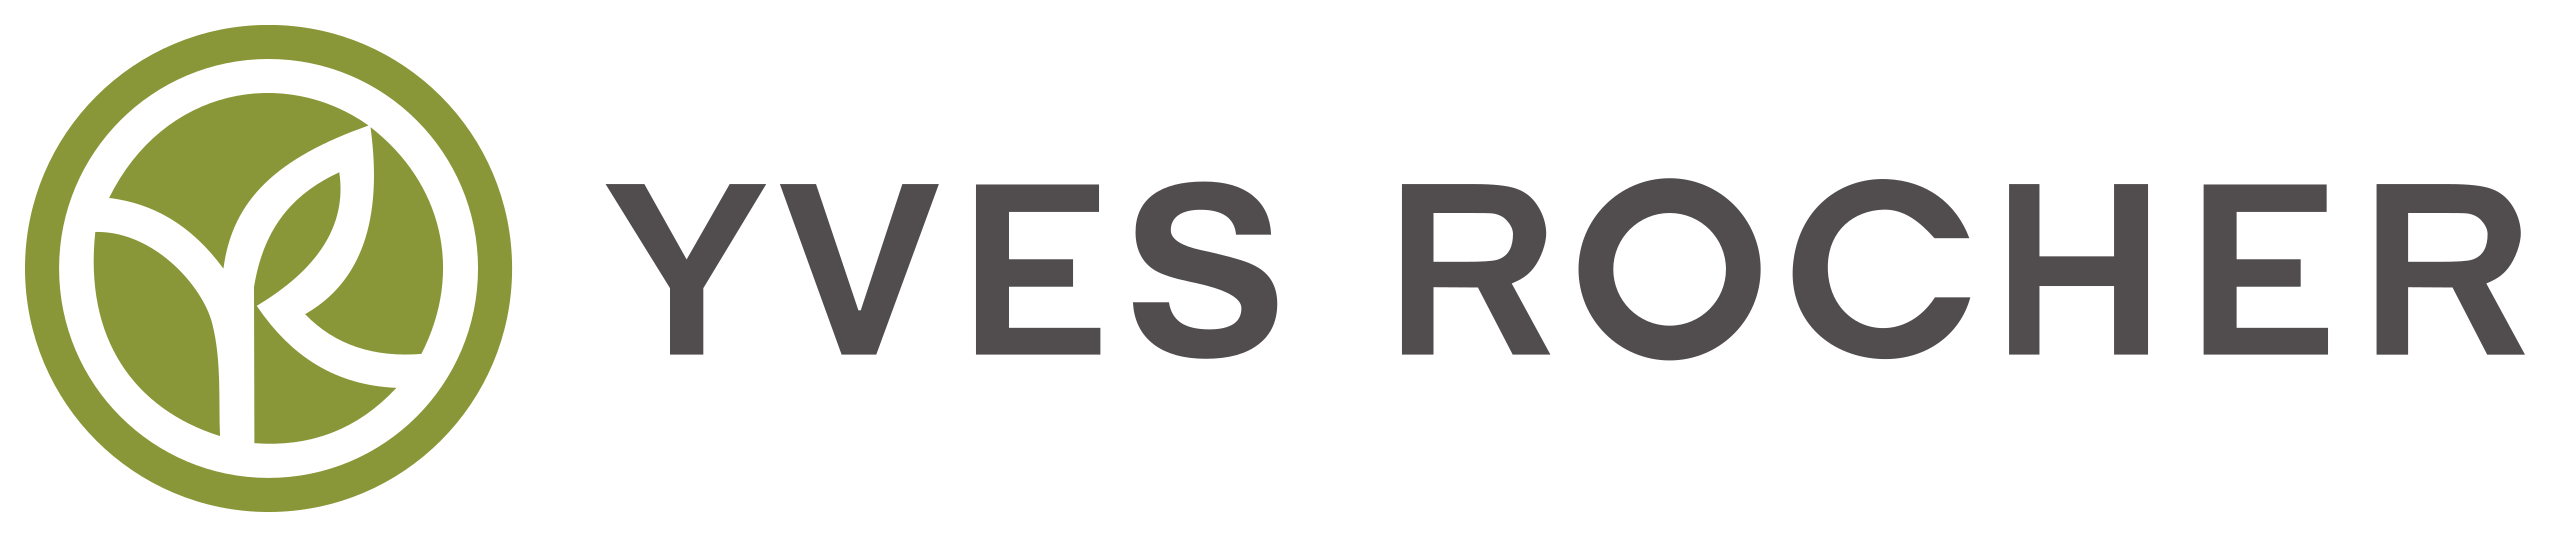 Yves Rocher logo.svg